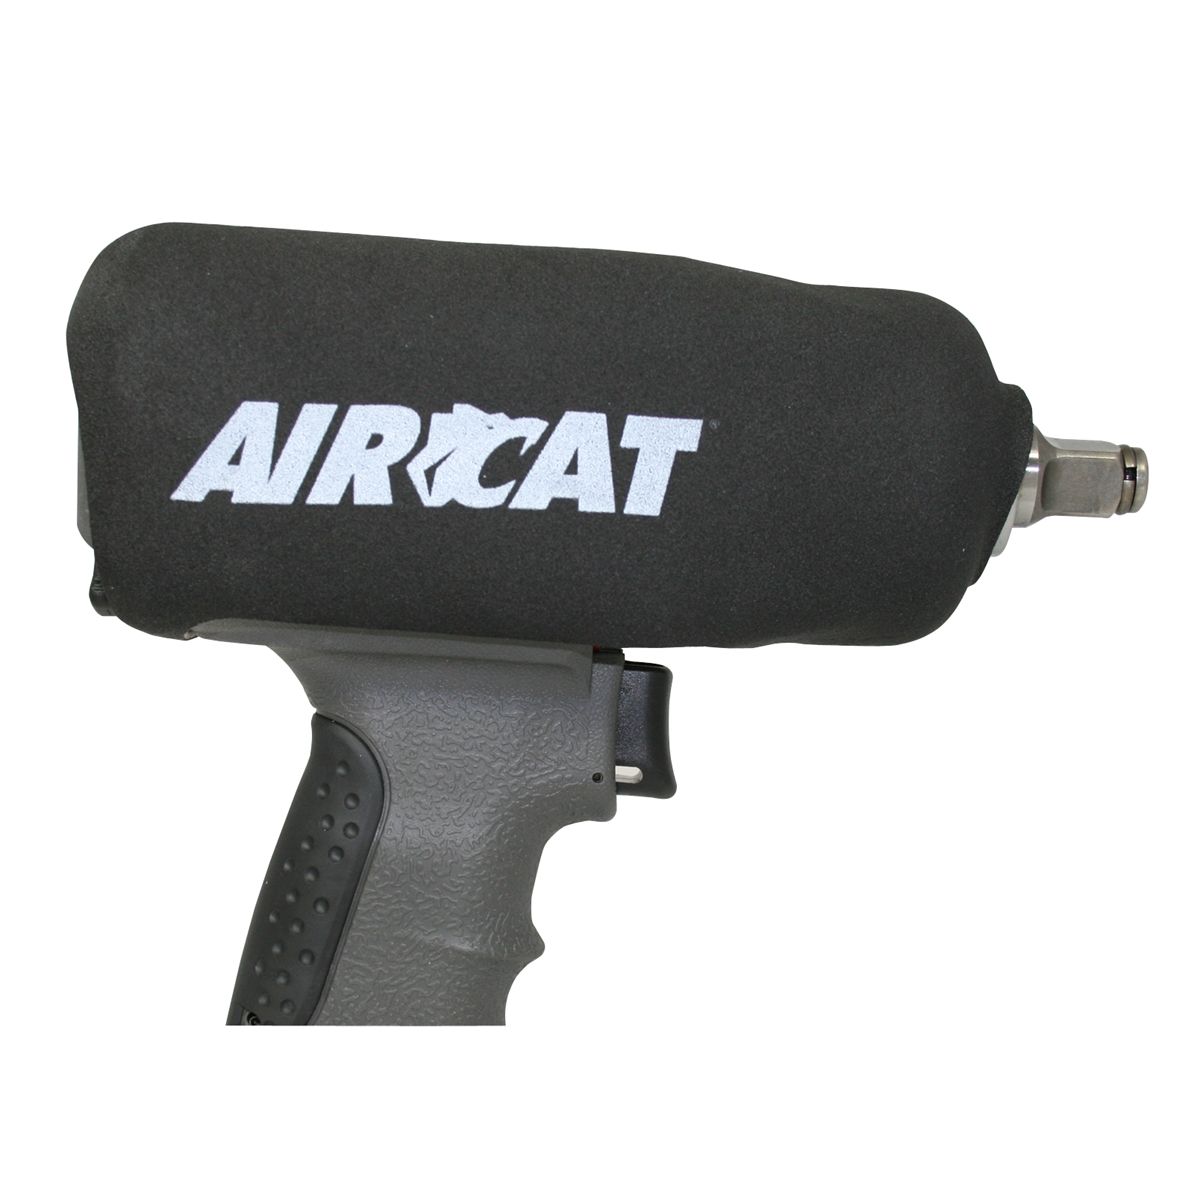 AirCat AIRCAT Sleek Black Boot 1300-TH 1300-THBB